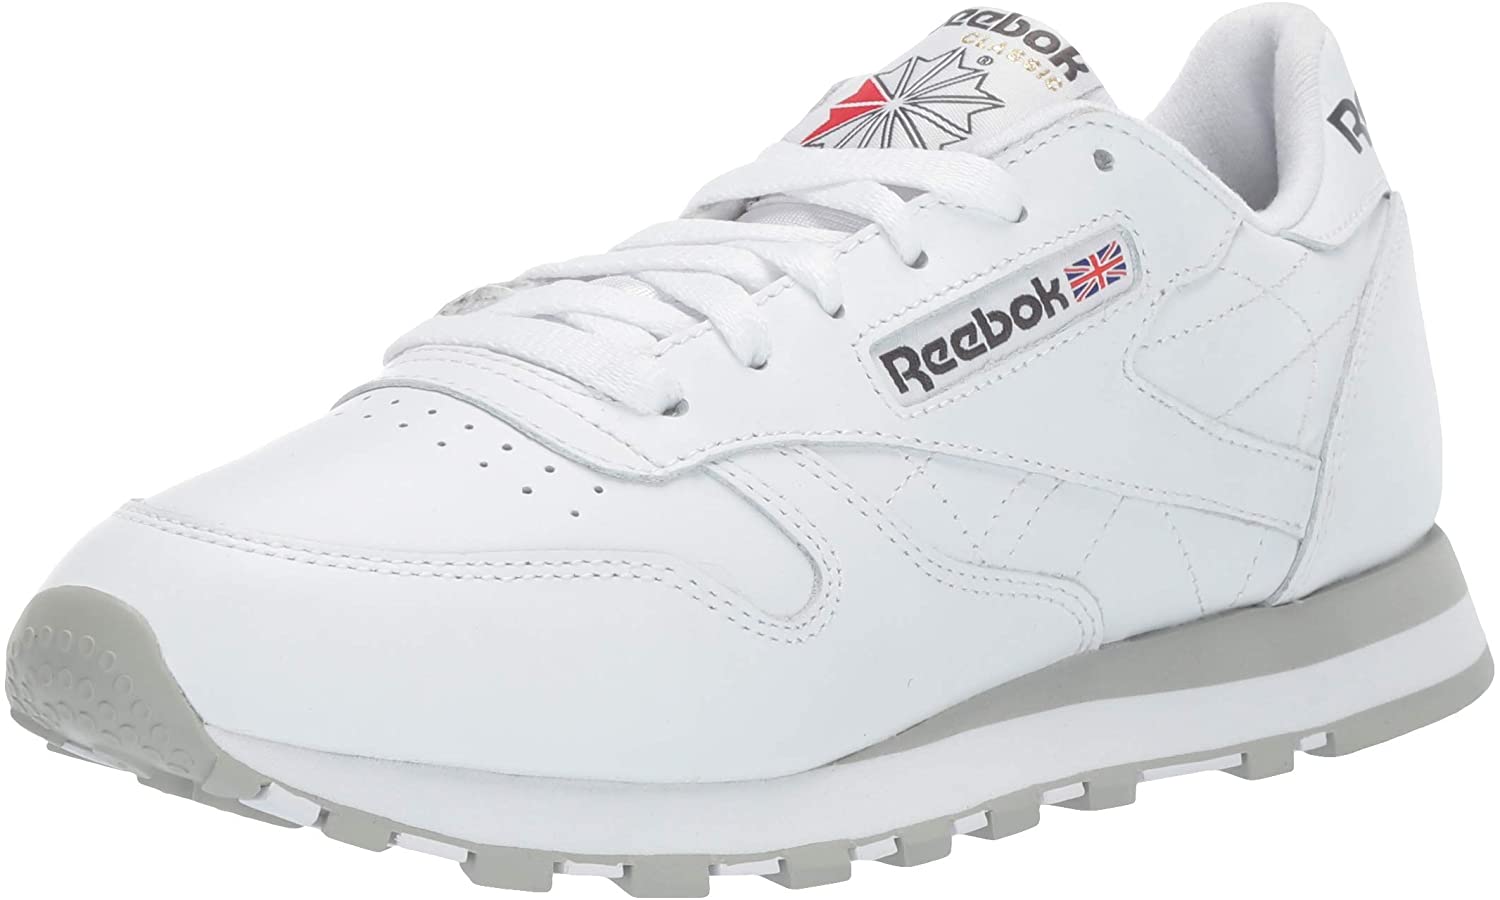 Reebok Classic White/White/Light Grey 2 Sneakers NW/OB eBay